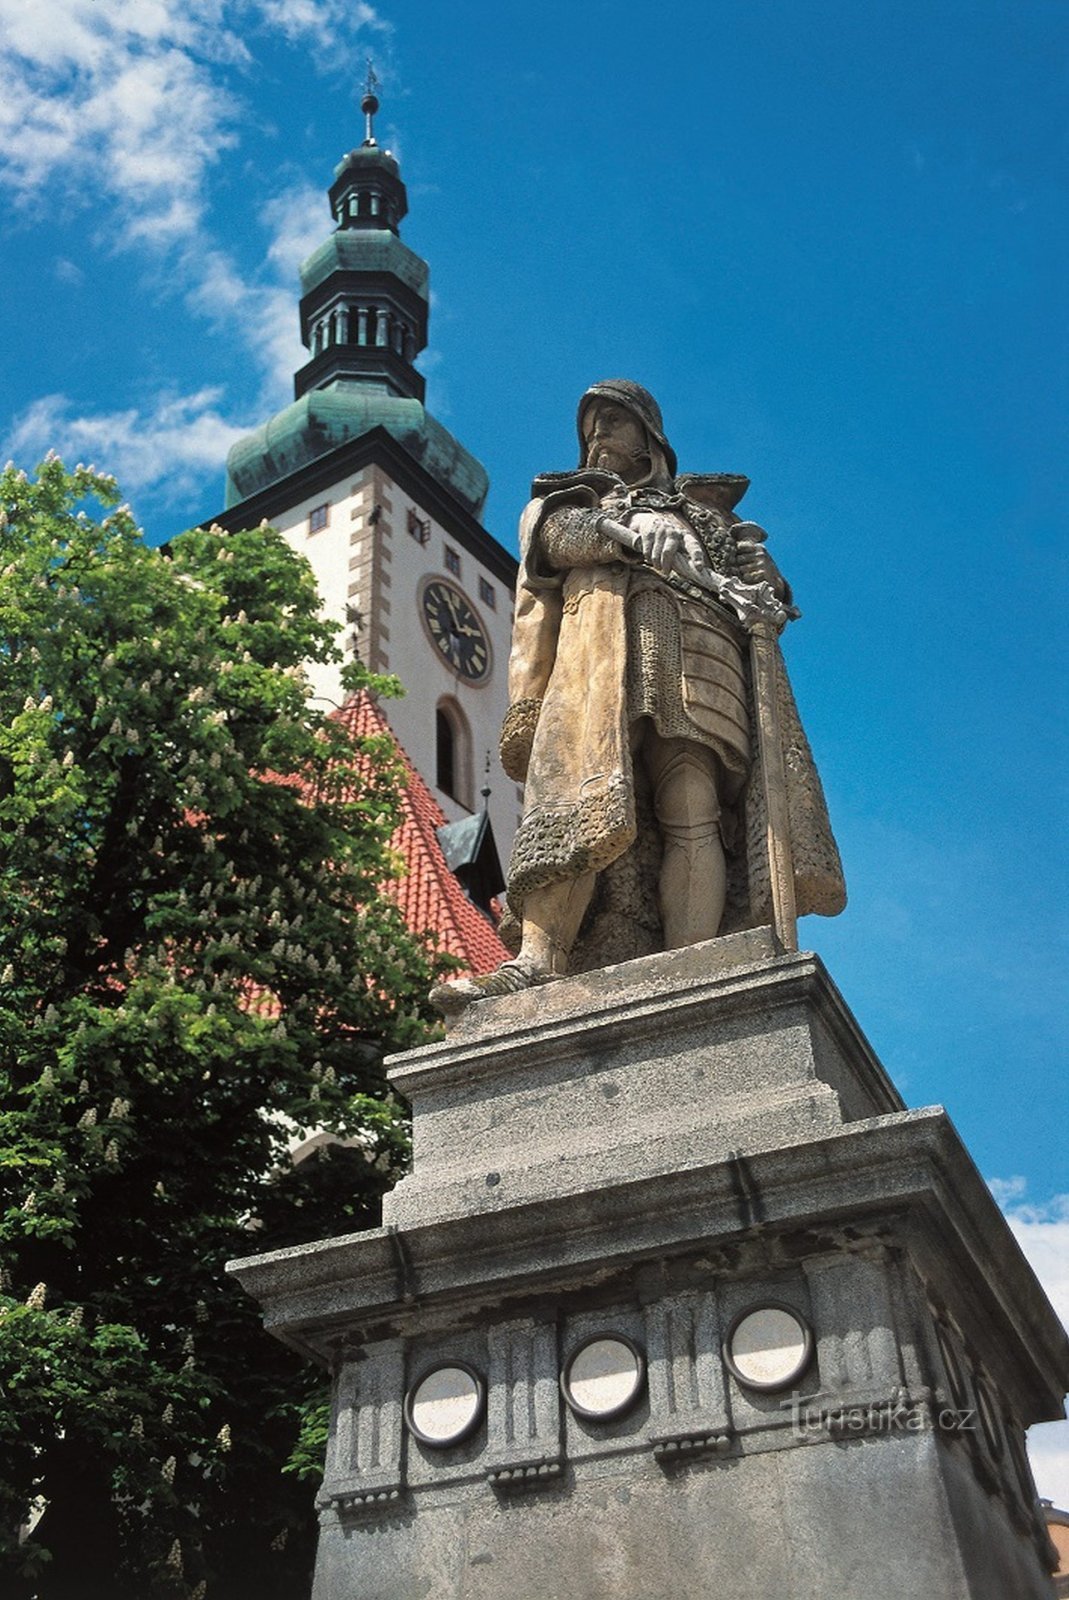 Statue of Jan Žižka (c) Town of Tábor